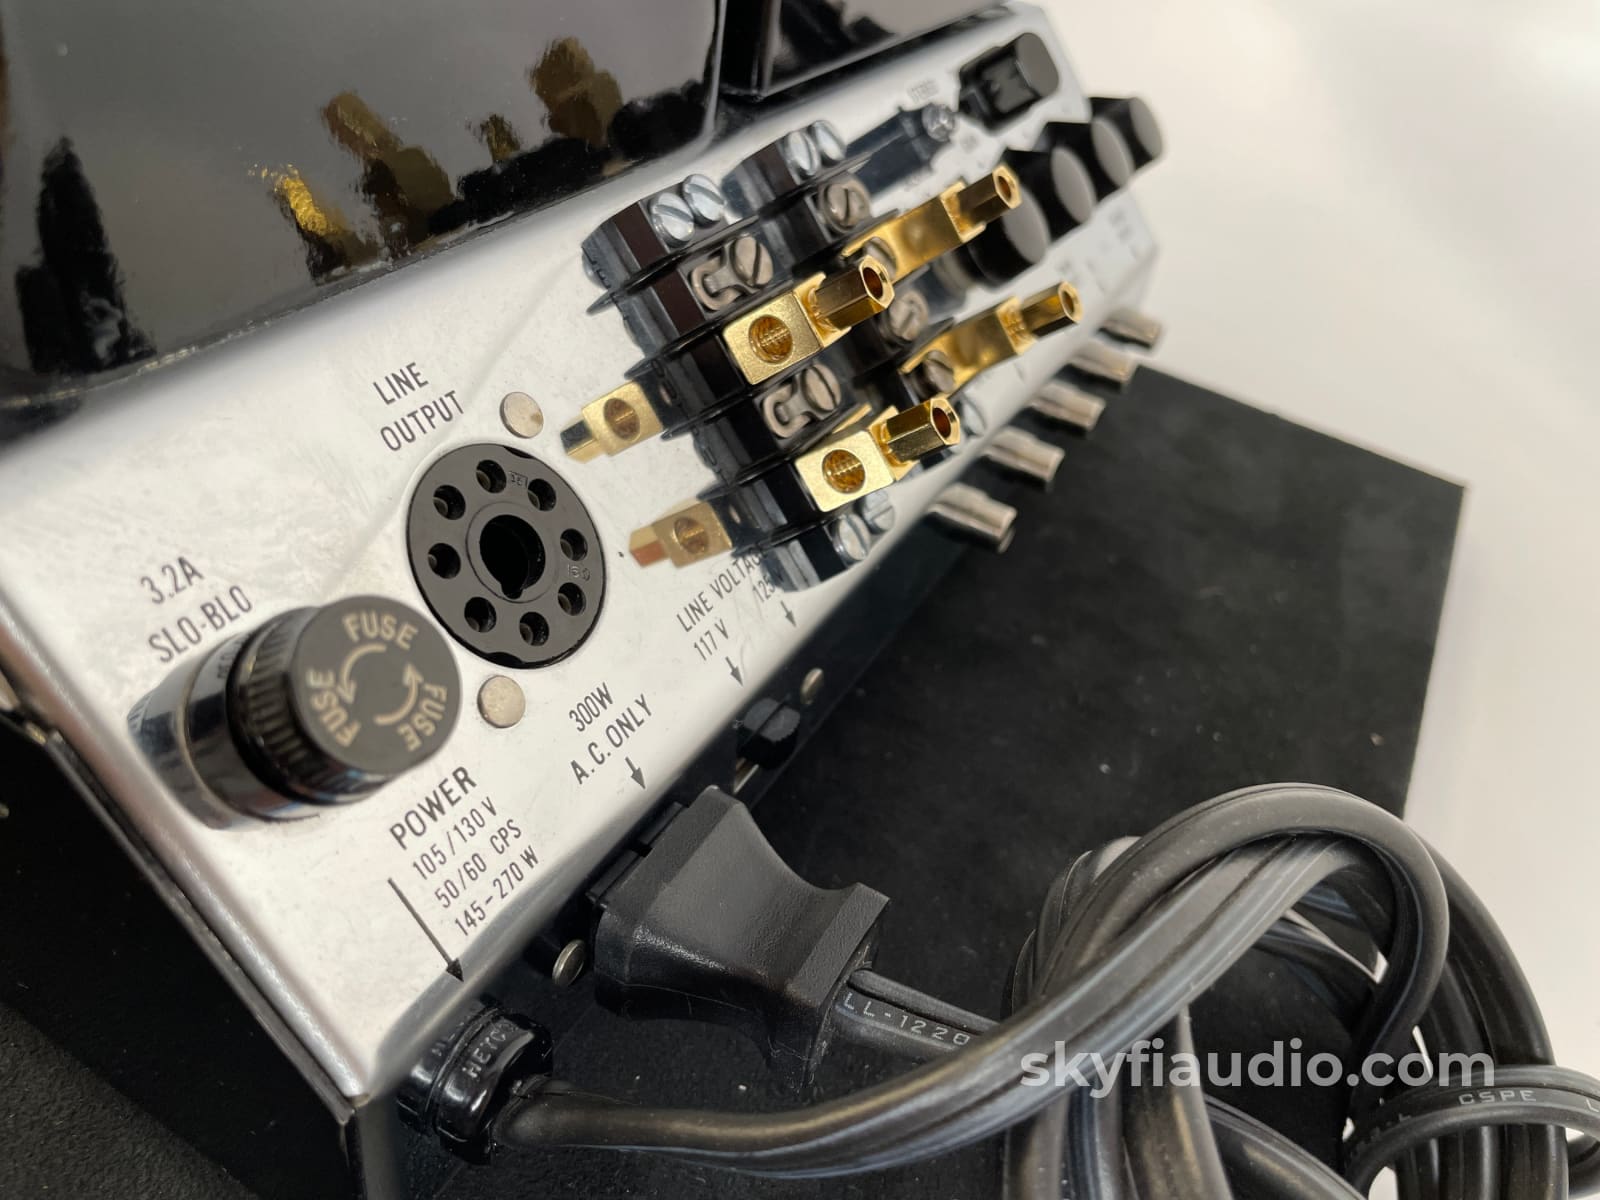 Mcintosh Mc240 Vintage Tube Amplifier With Telefunken Tubes